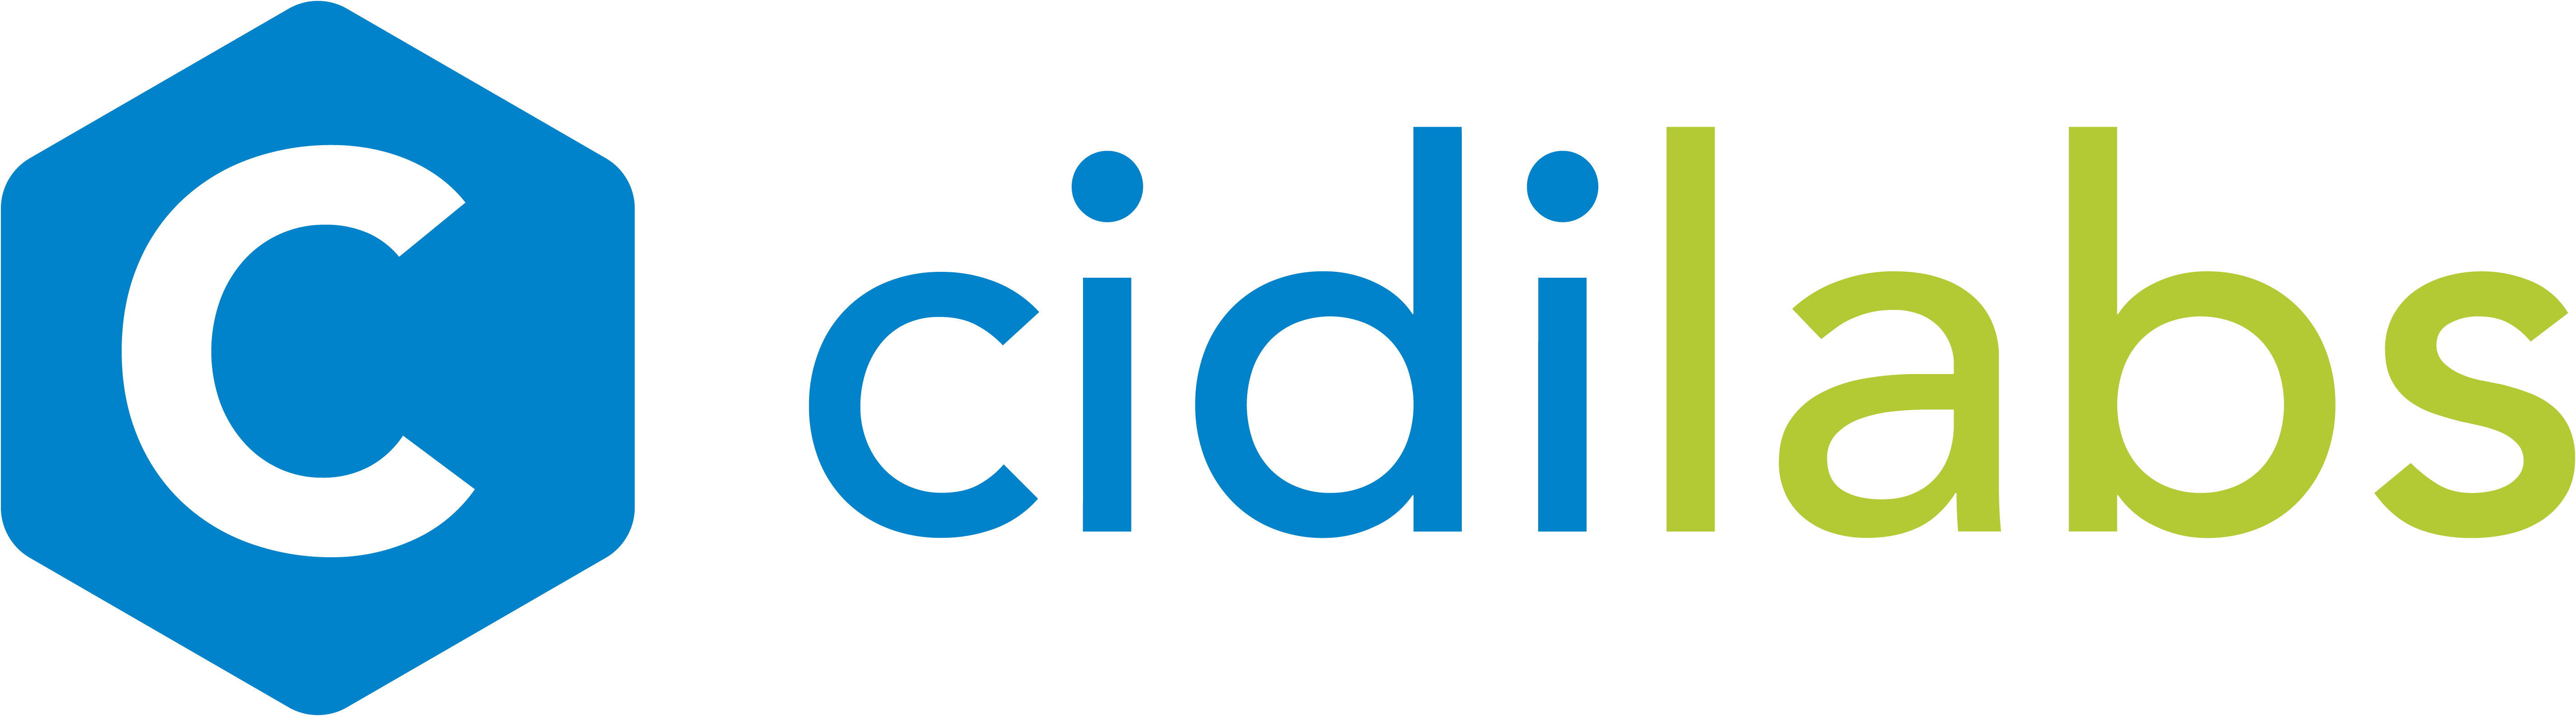 Cidi Labs Logo